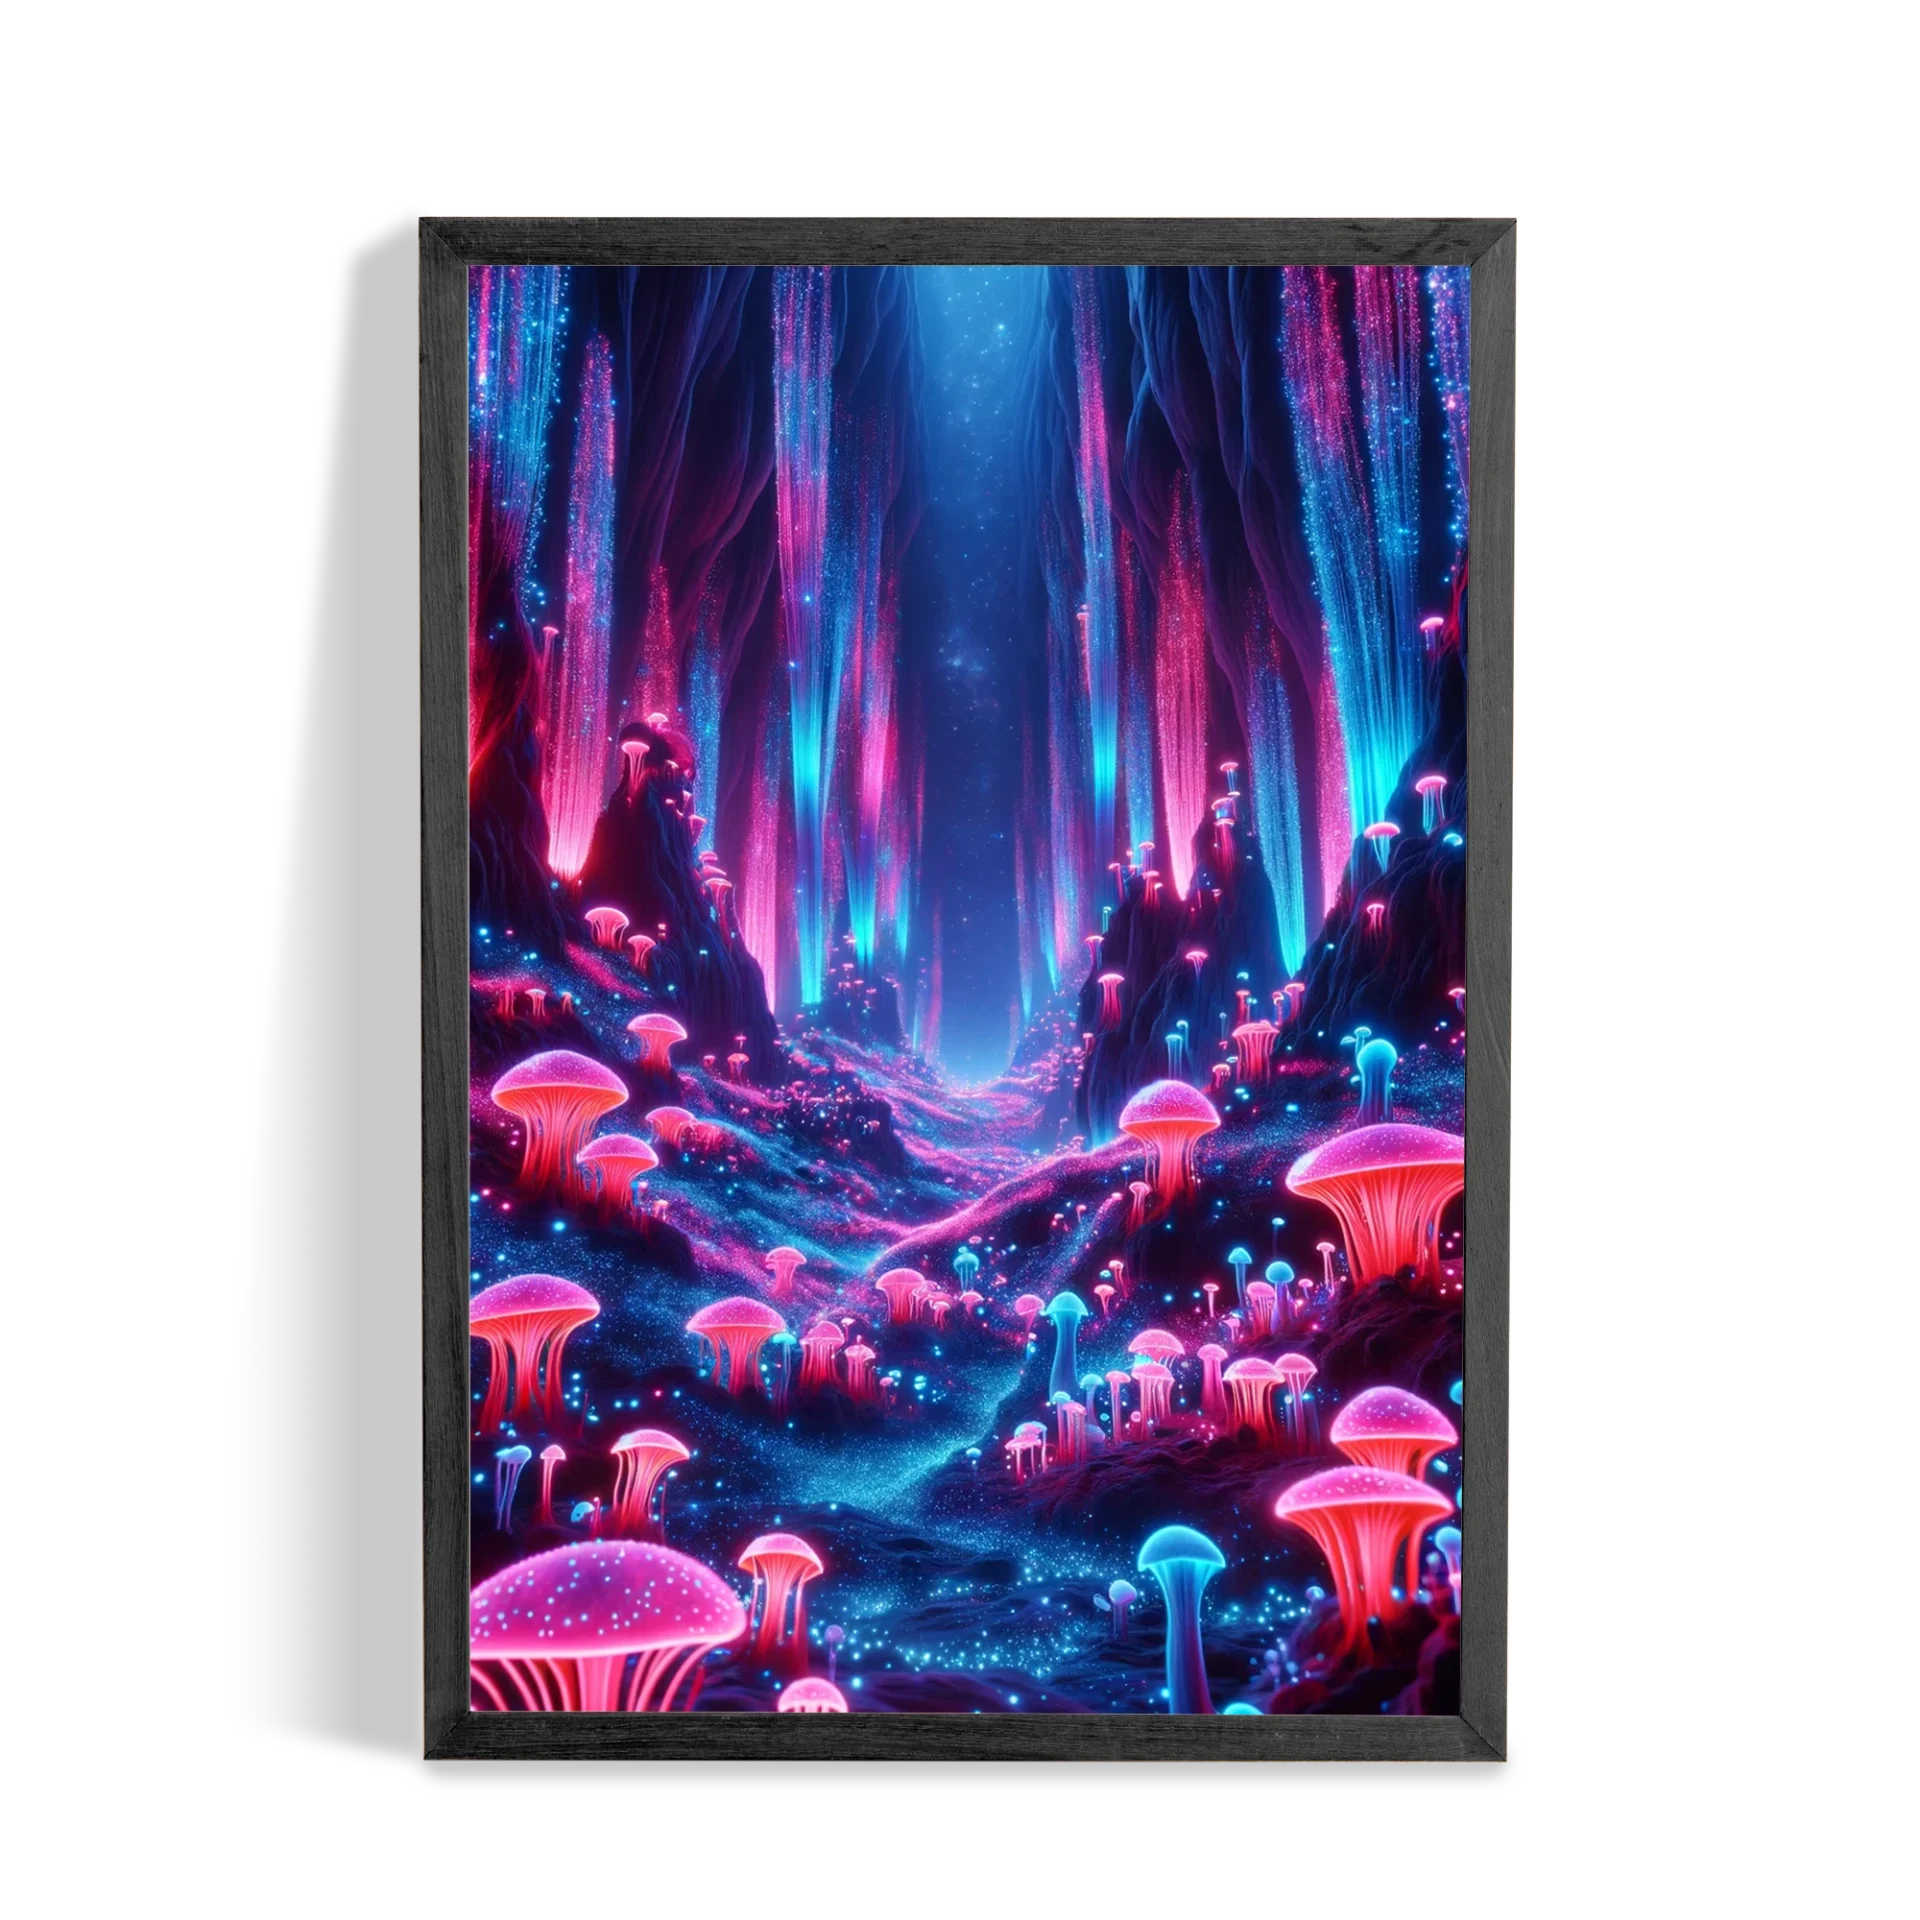 Subterranean Neon Fungi Forest